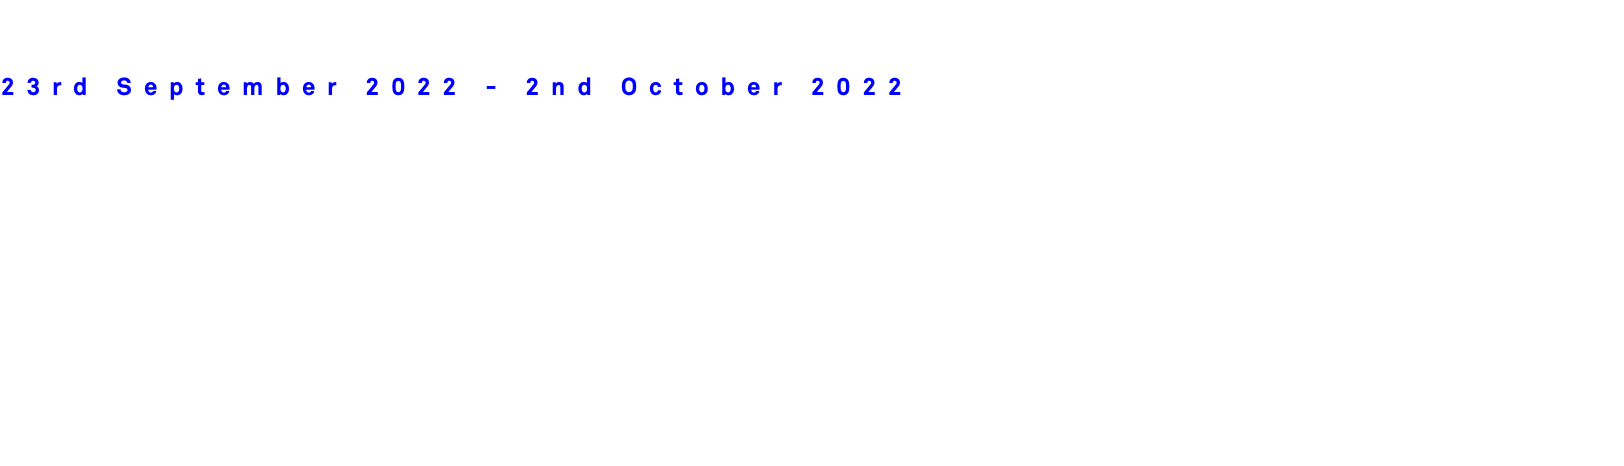 FILET 23rd September 2022 - 2nd October 2022 CLARE STRAND & STEFFI KLENZ A BORING GREY JUMPER AND AN OVERCOMPLICATED TOP 